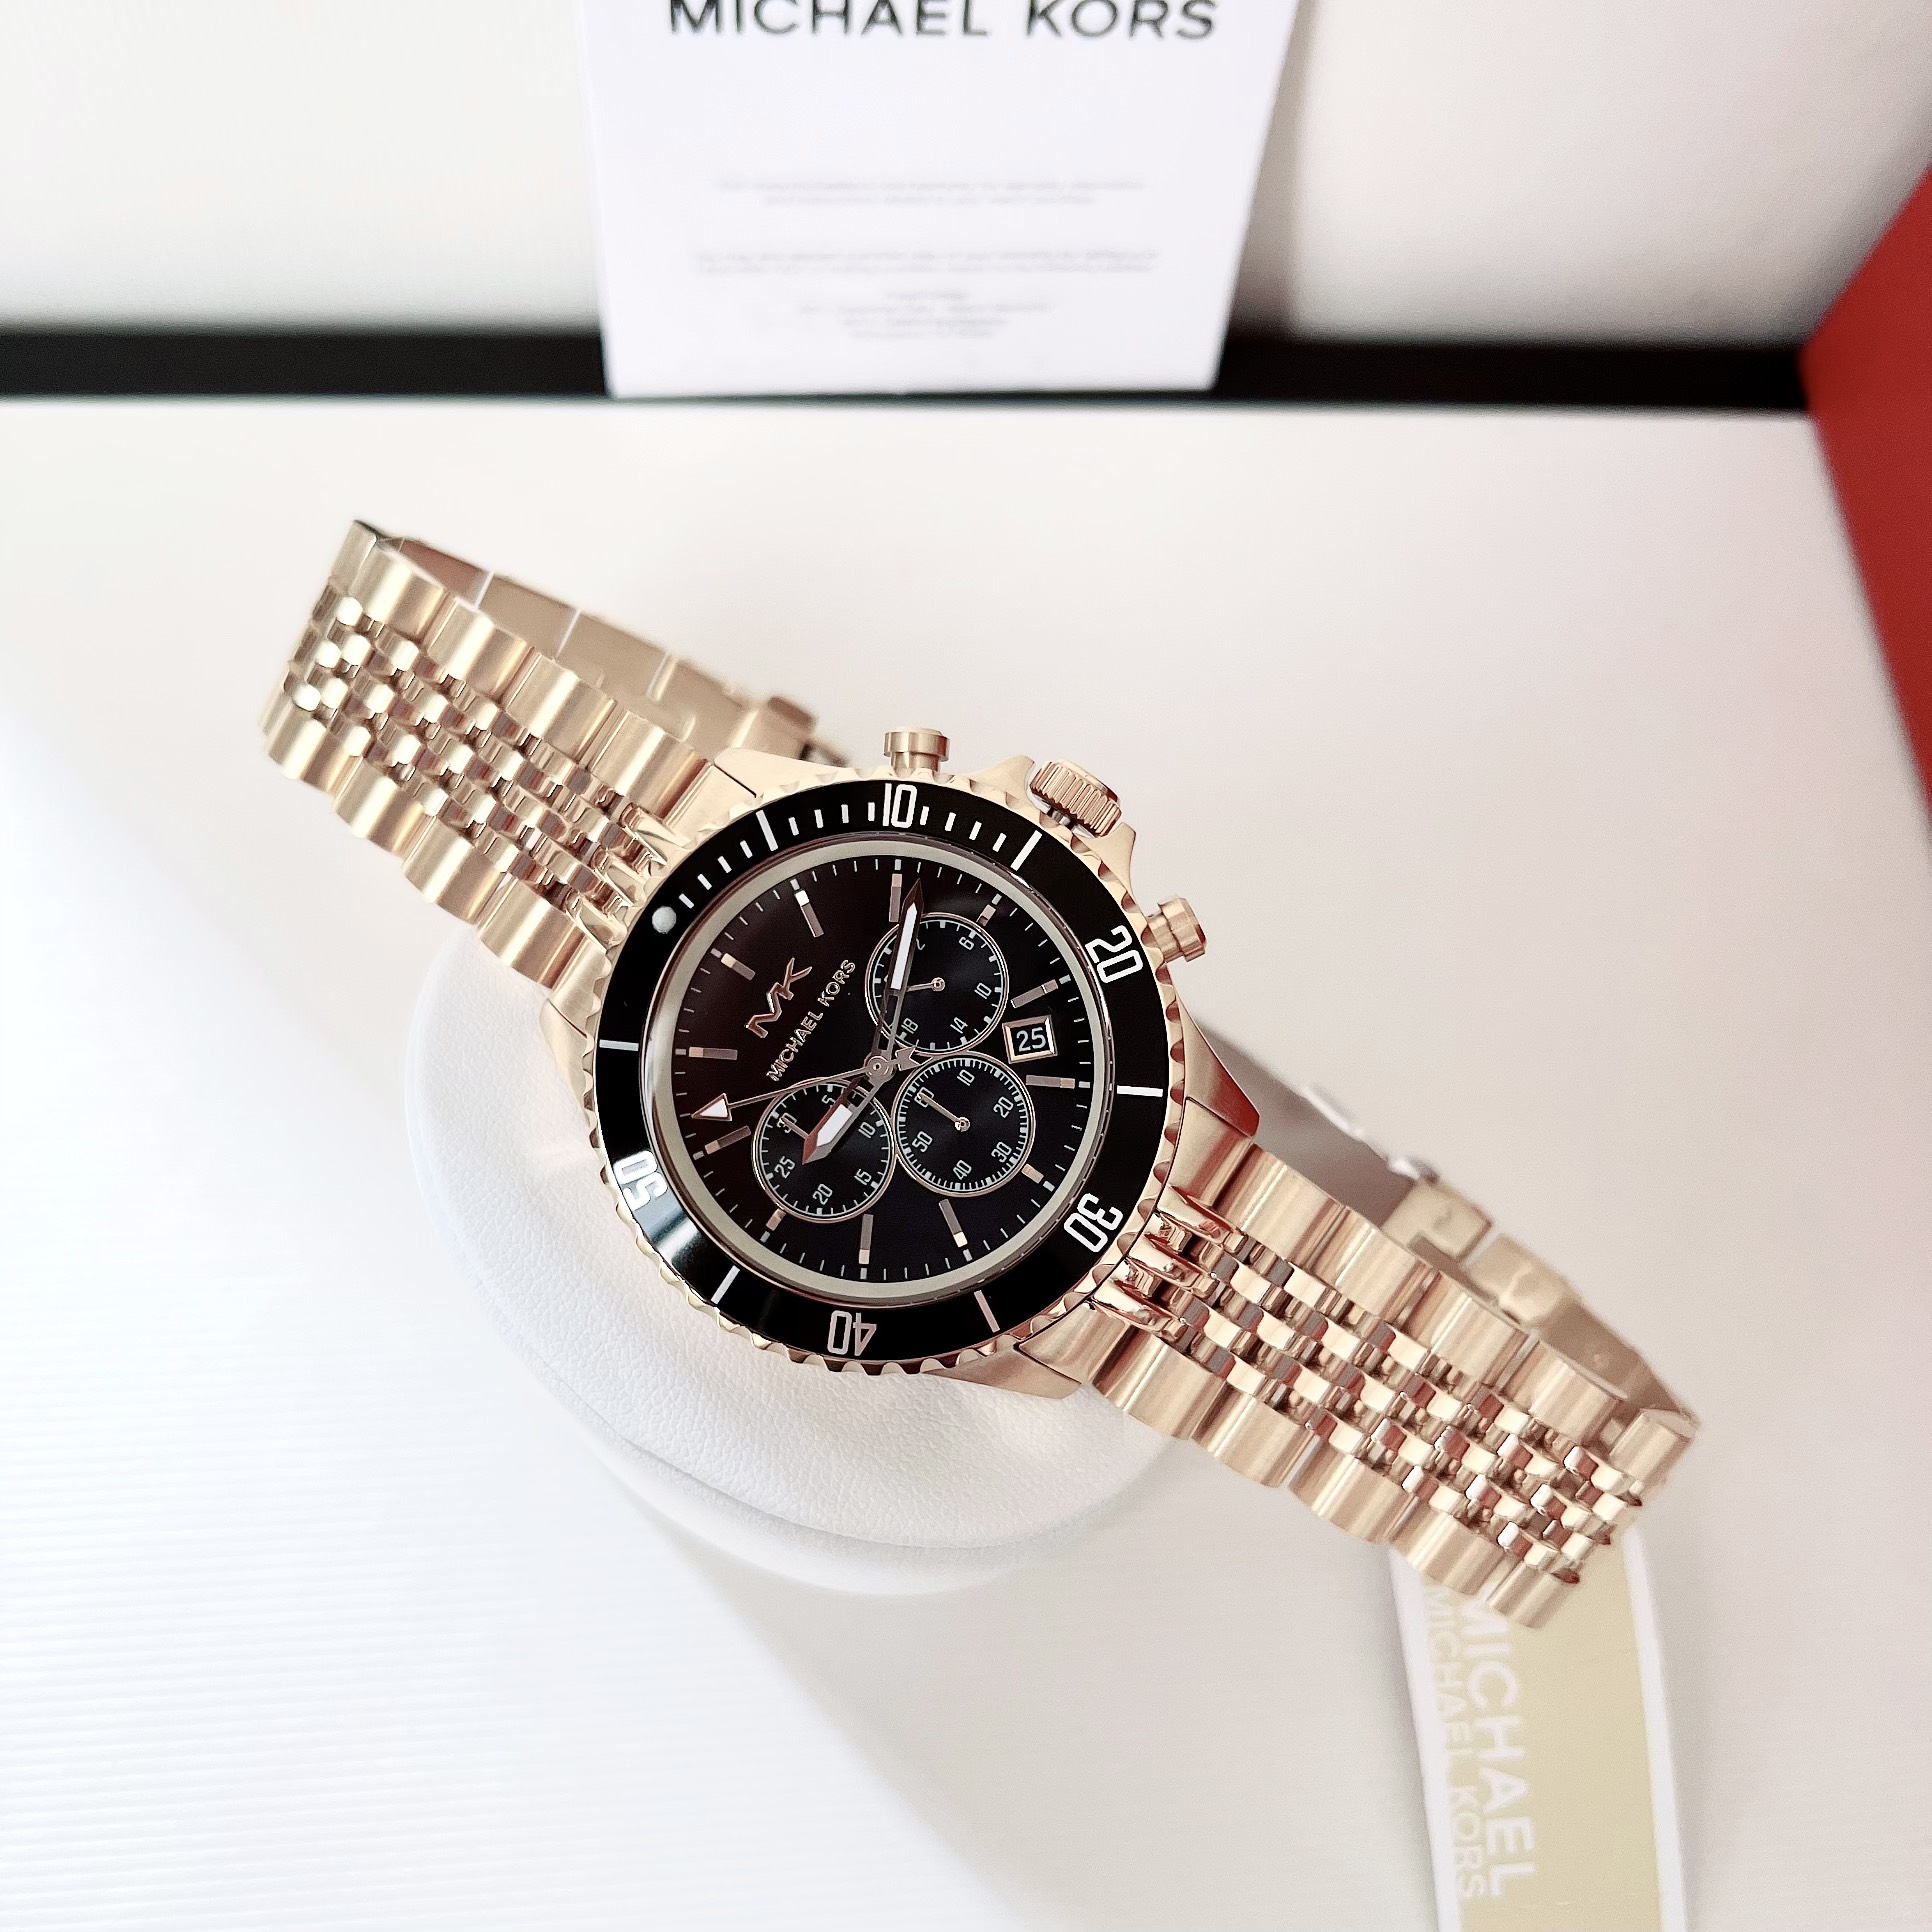 Mens Watches Designer Wrist Watches for Men  Michael Kors  Michael Kors